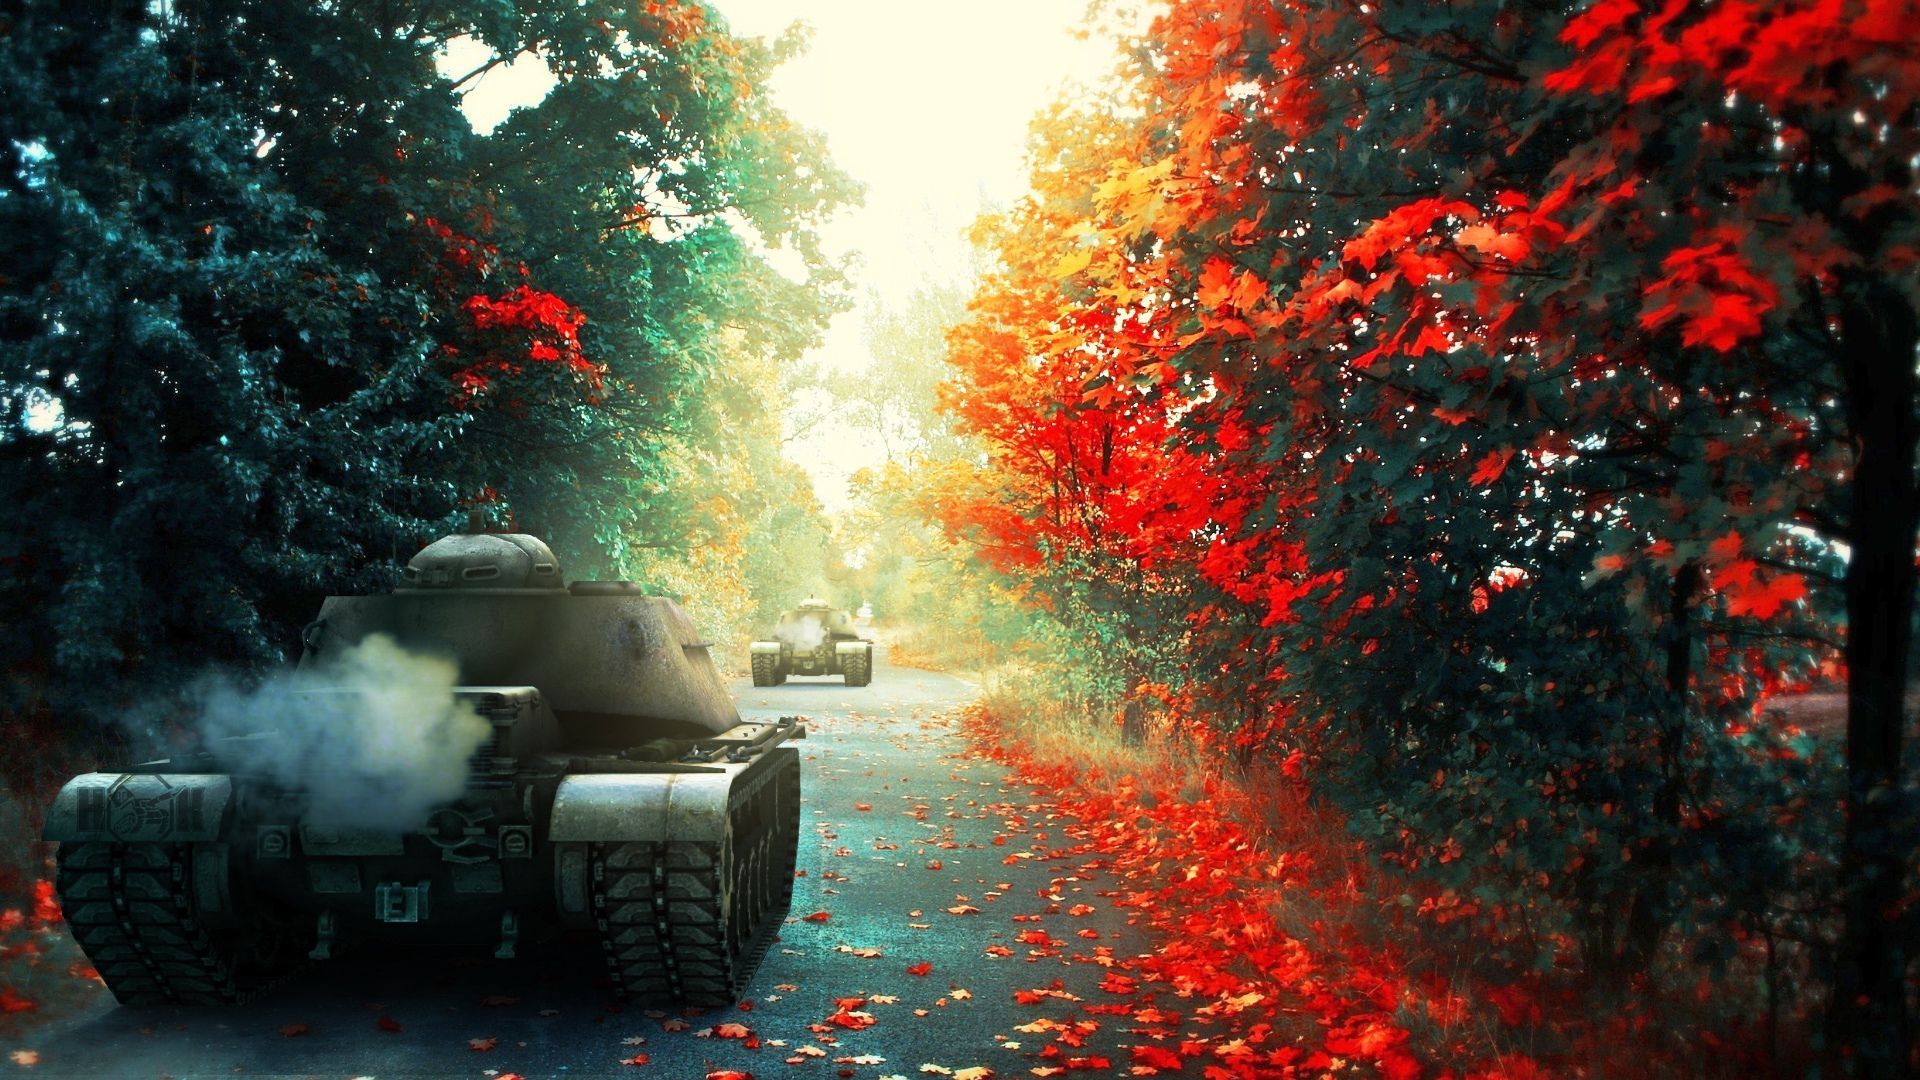 Game World Tanks Autumn Forest. Tank wallpaper, World of tanks